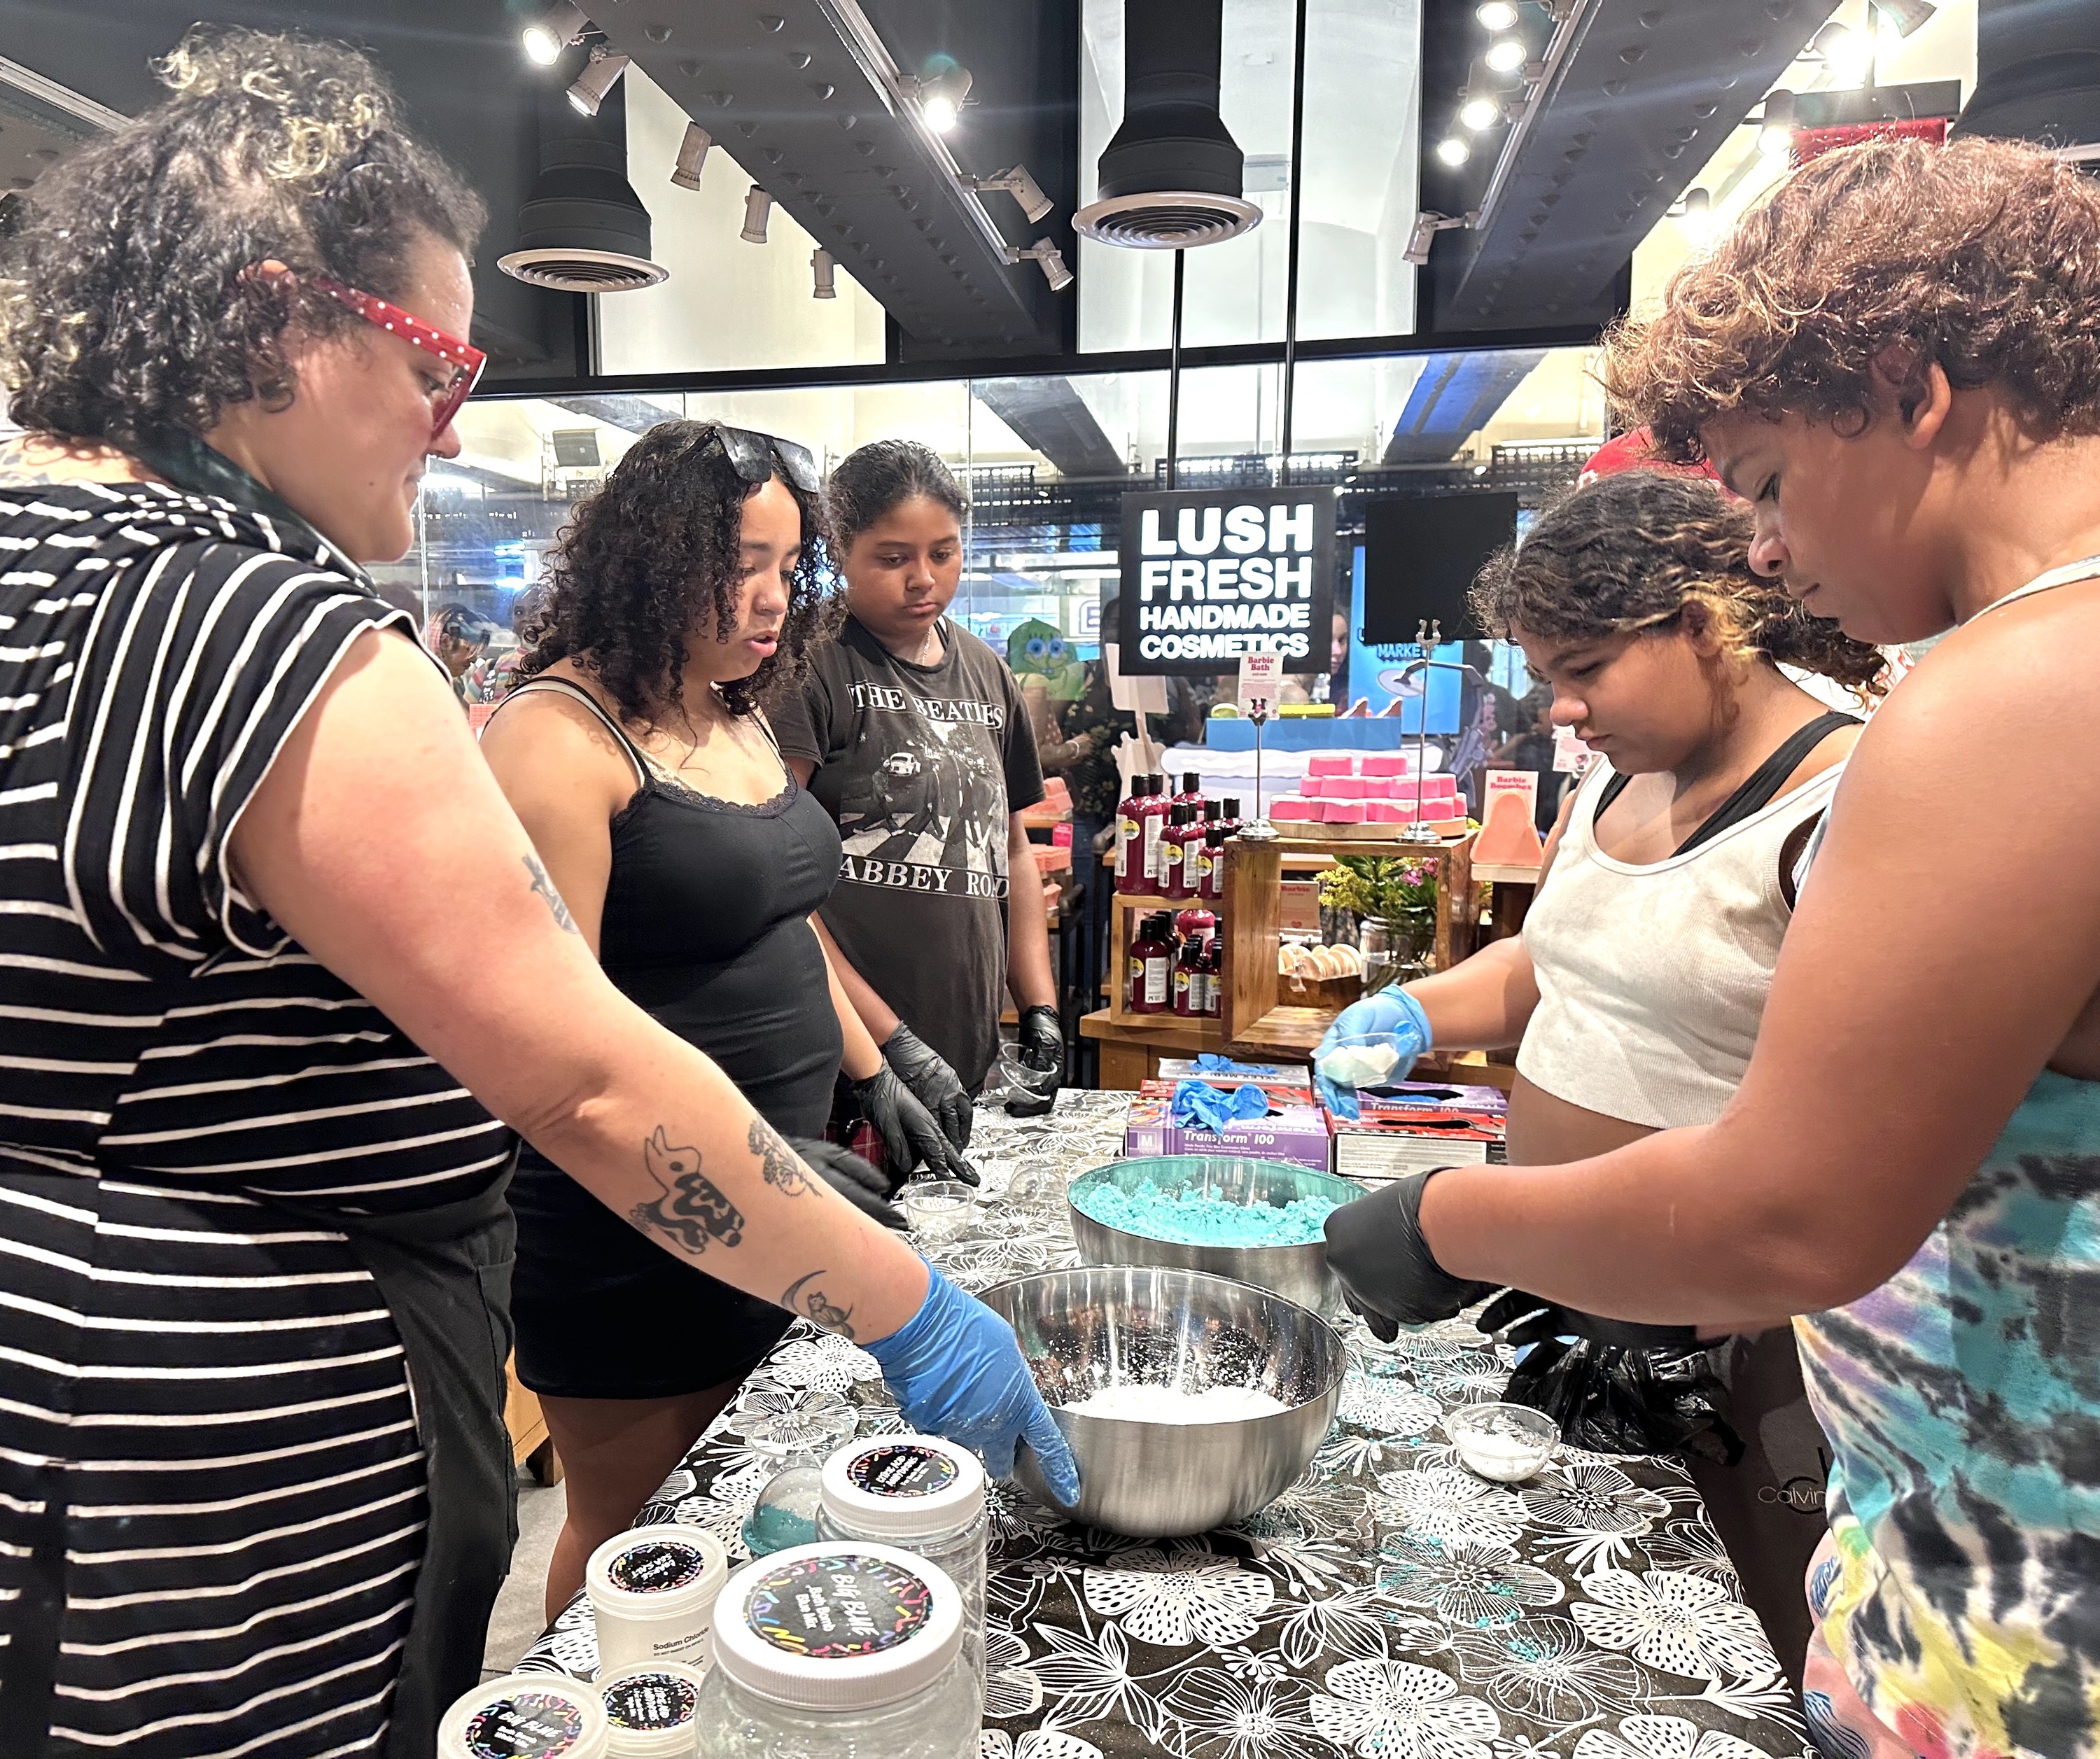 Lush in Columbus Circle is hosting DIY bath bomb workshops